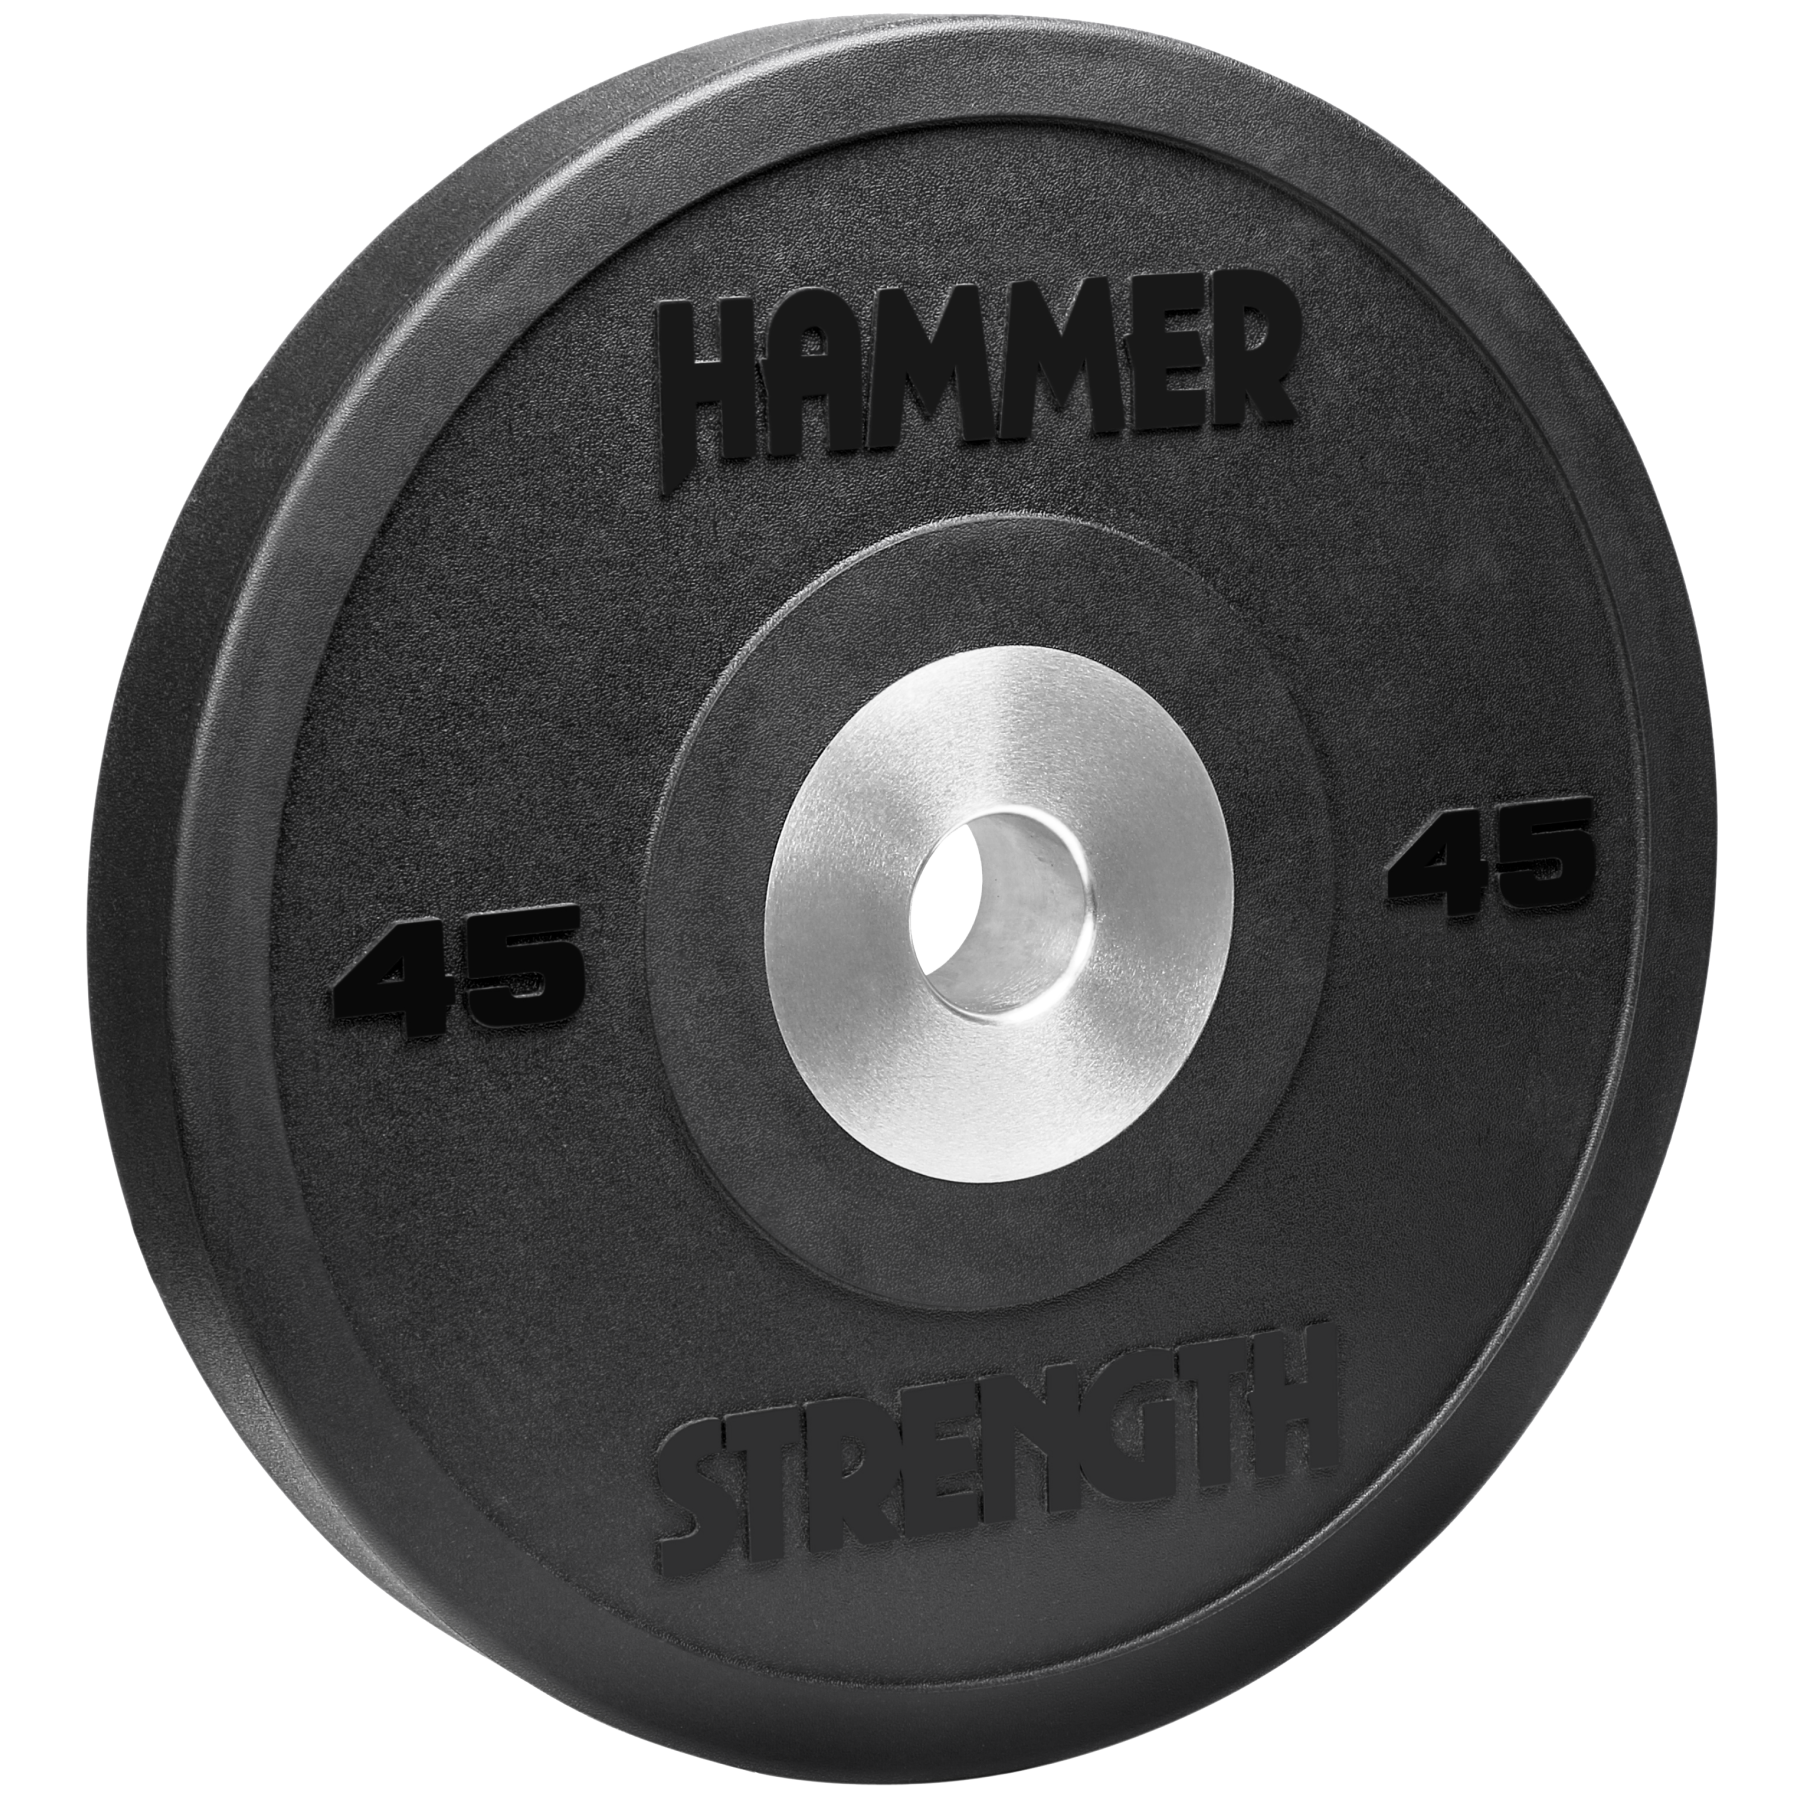 Hammer Strength Competition Kettlebells